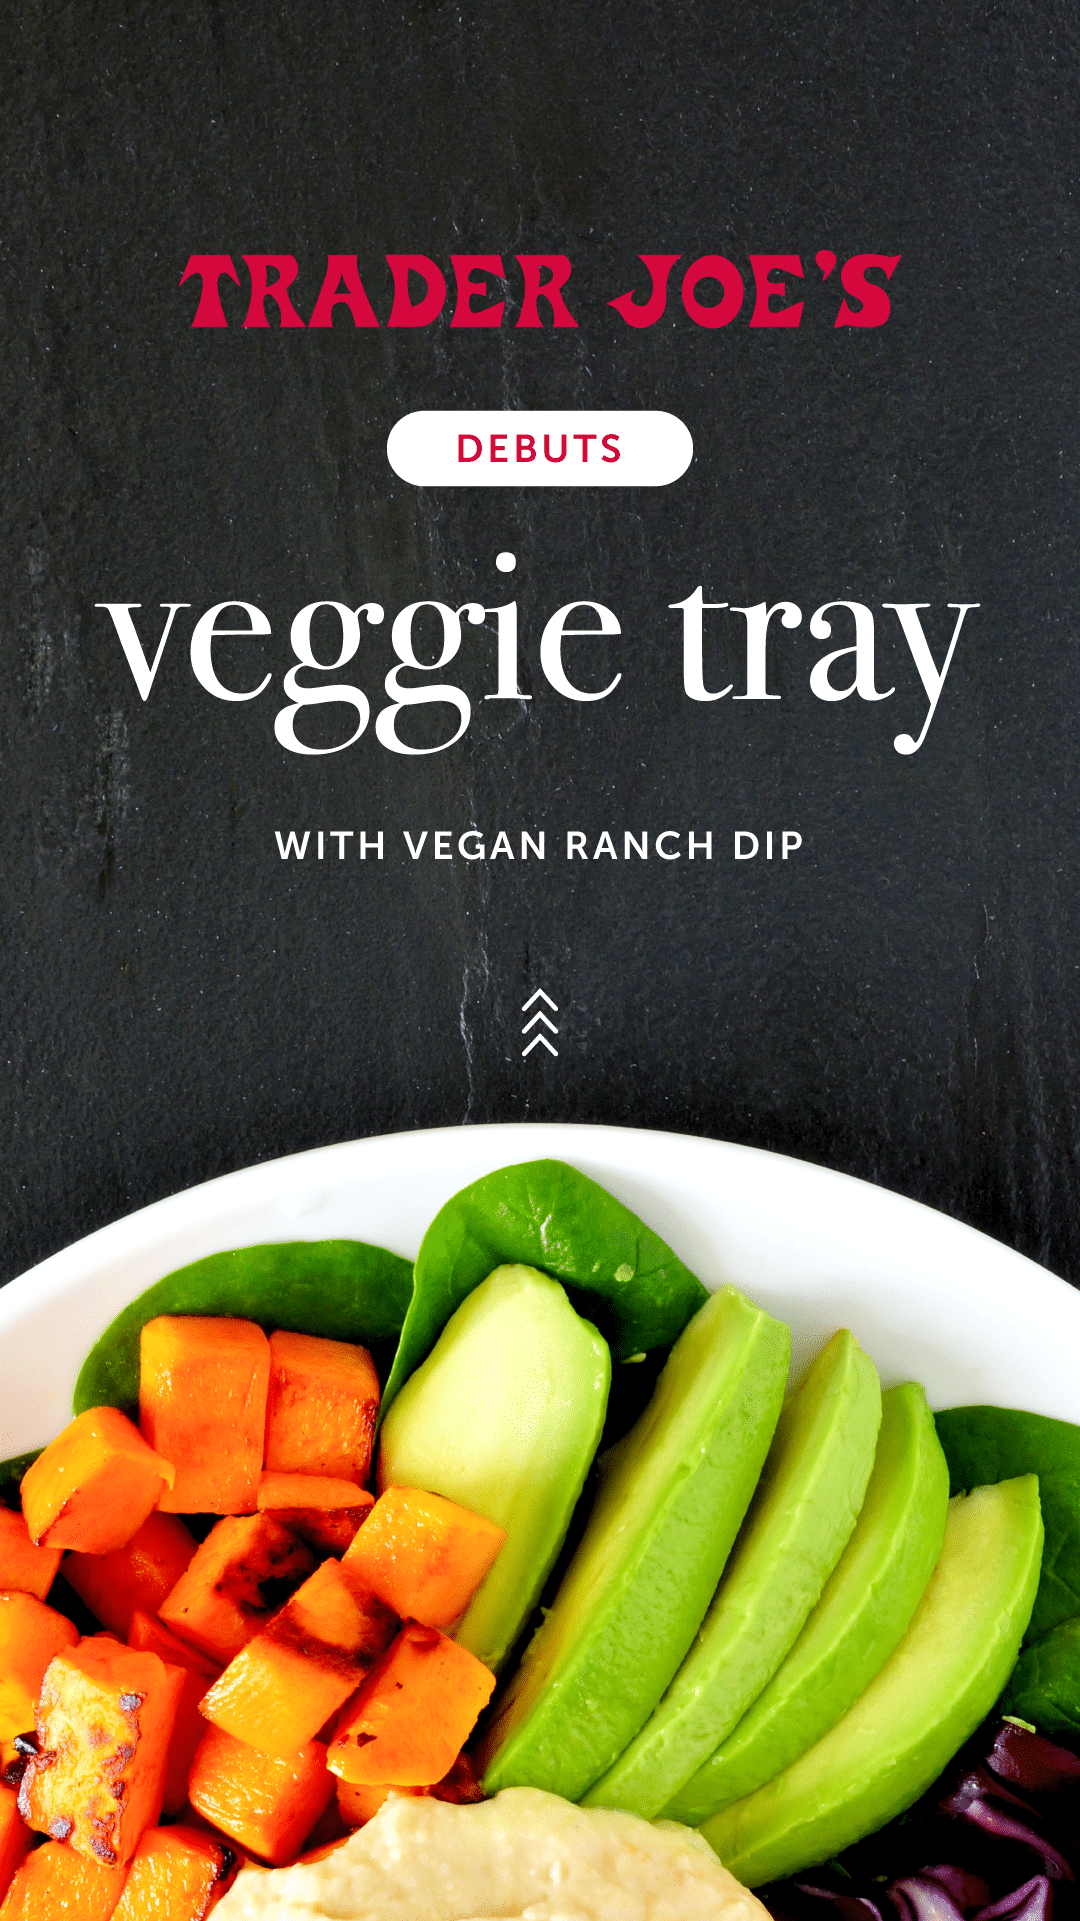 Trader Joe’s Debuts Veggie Tray With Vegan Ranch Dip